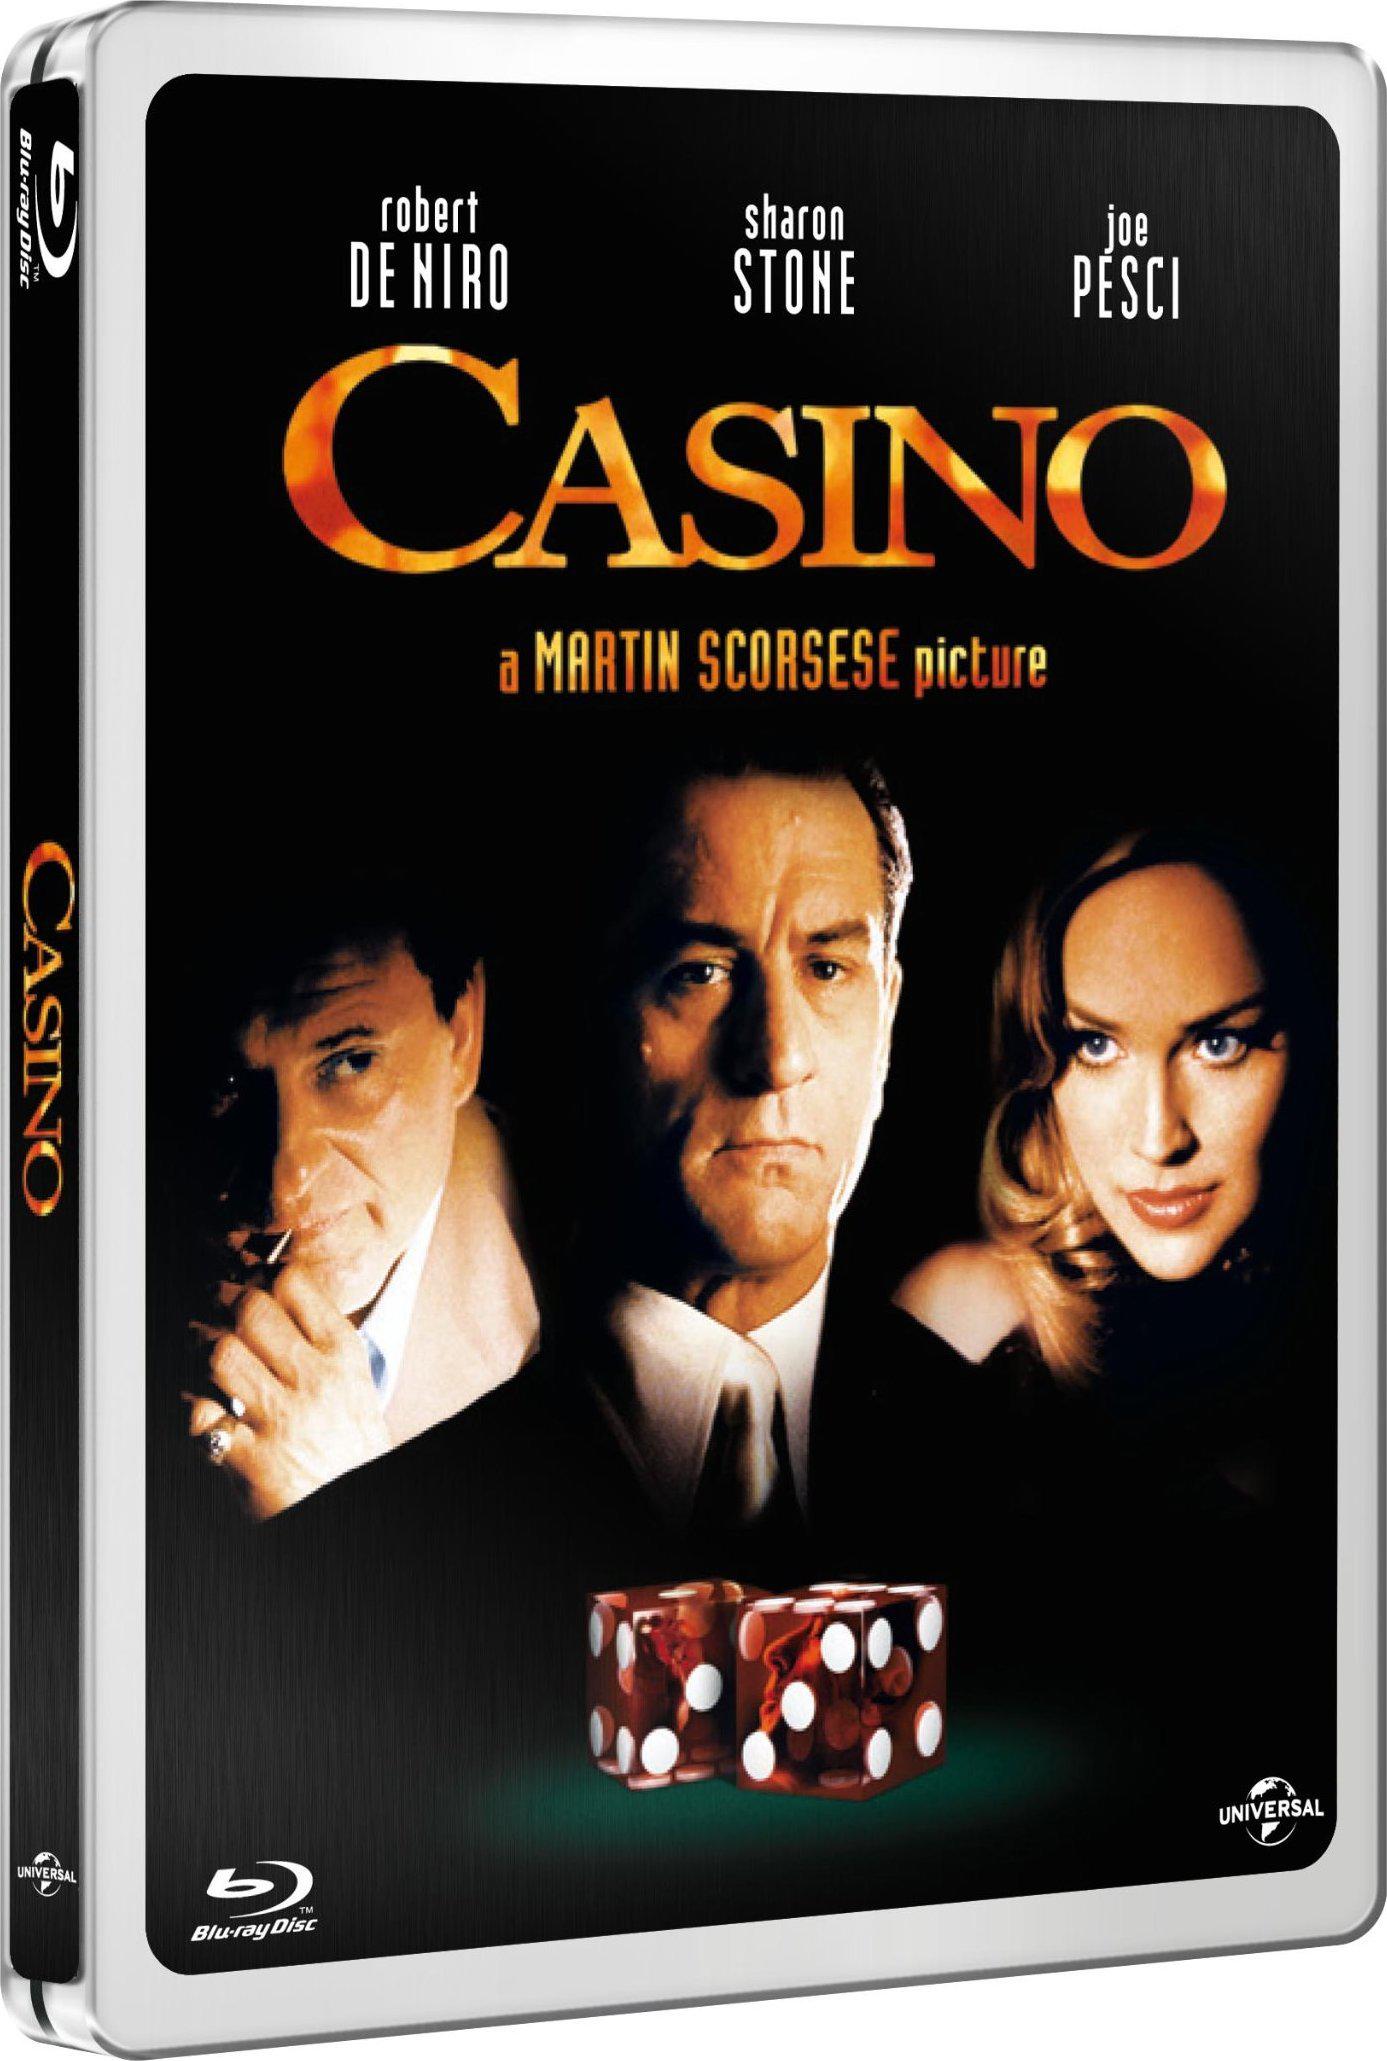 казино casino 1995